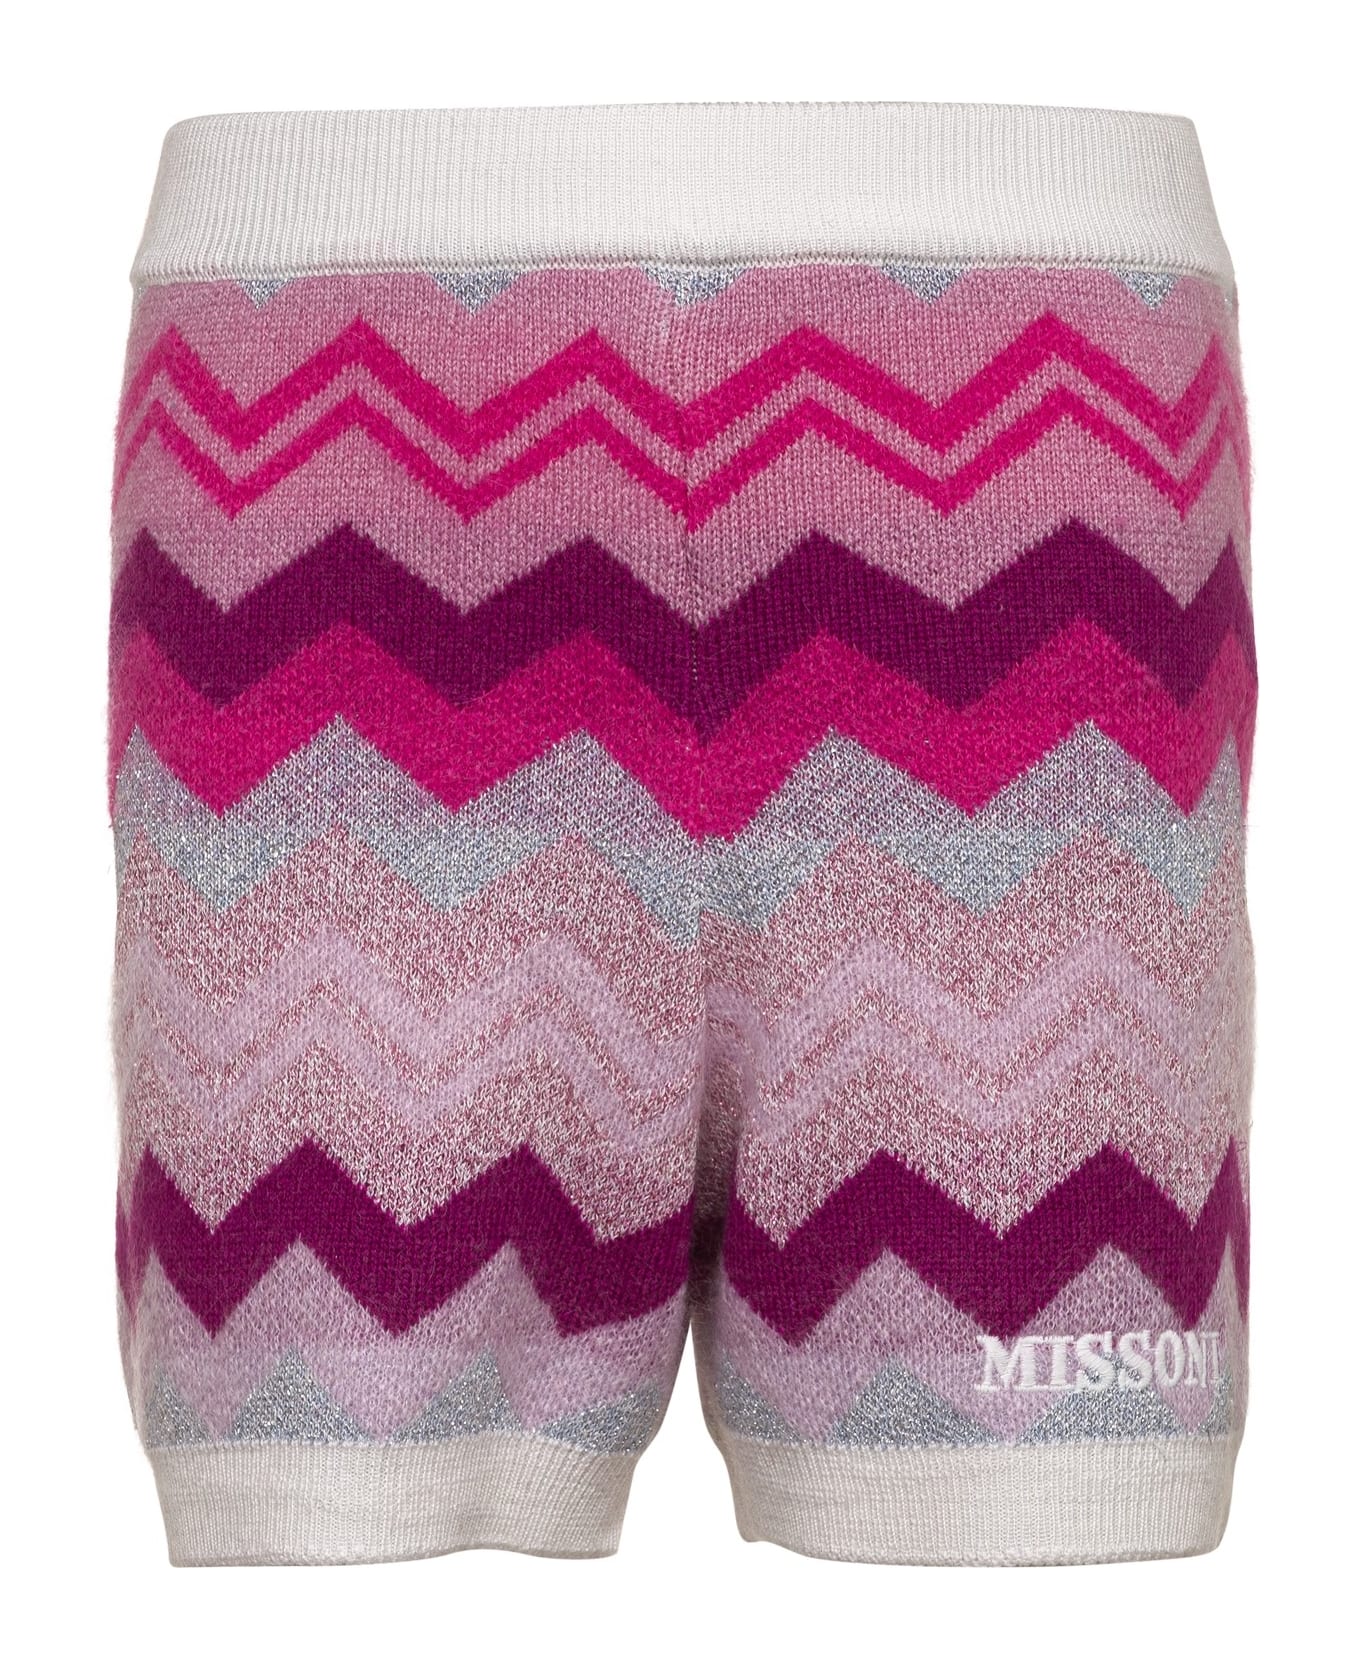 Missoni Kids Printed Knit Shorts - Multicolor